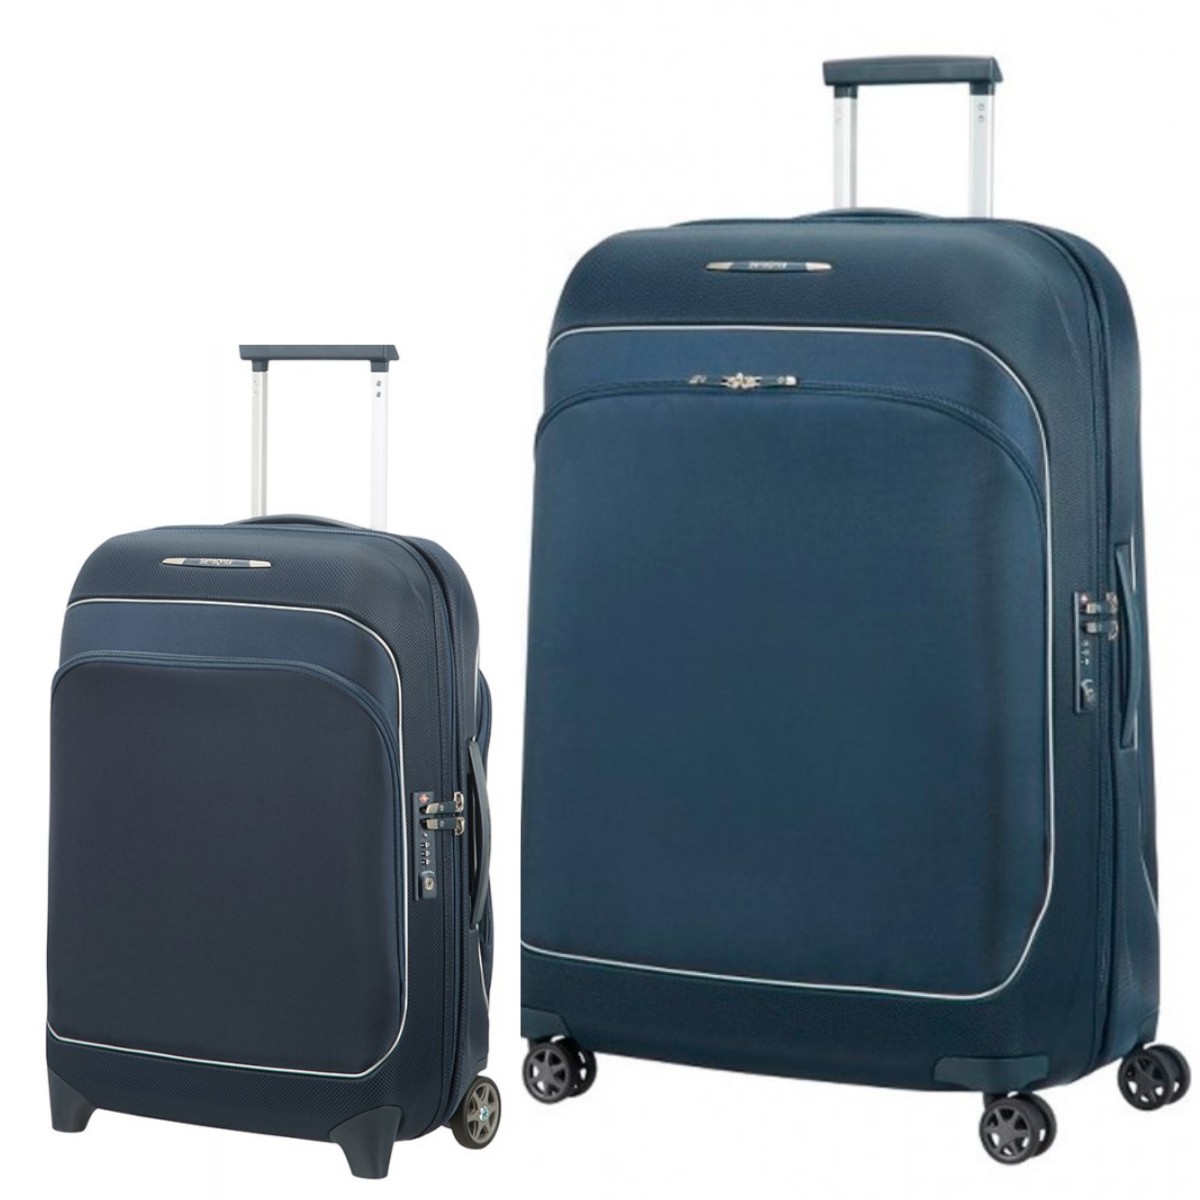 Viaja sin facturar en Ryanair con esta maleta de cabina Samsonite